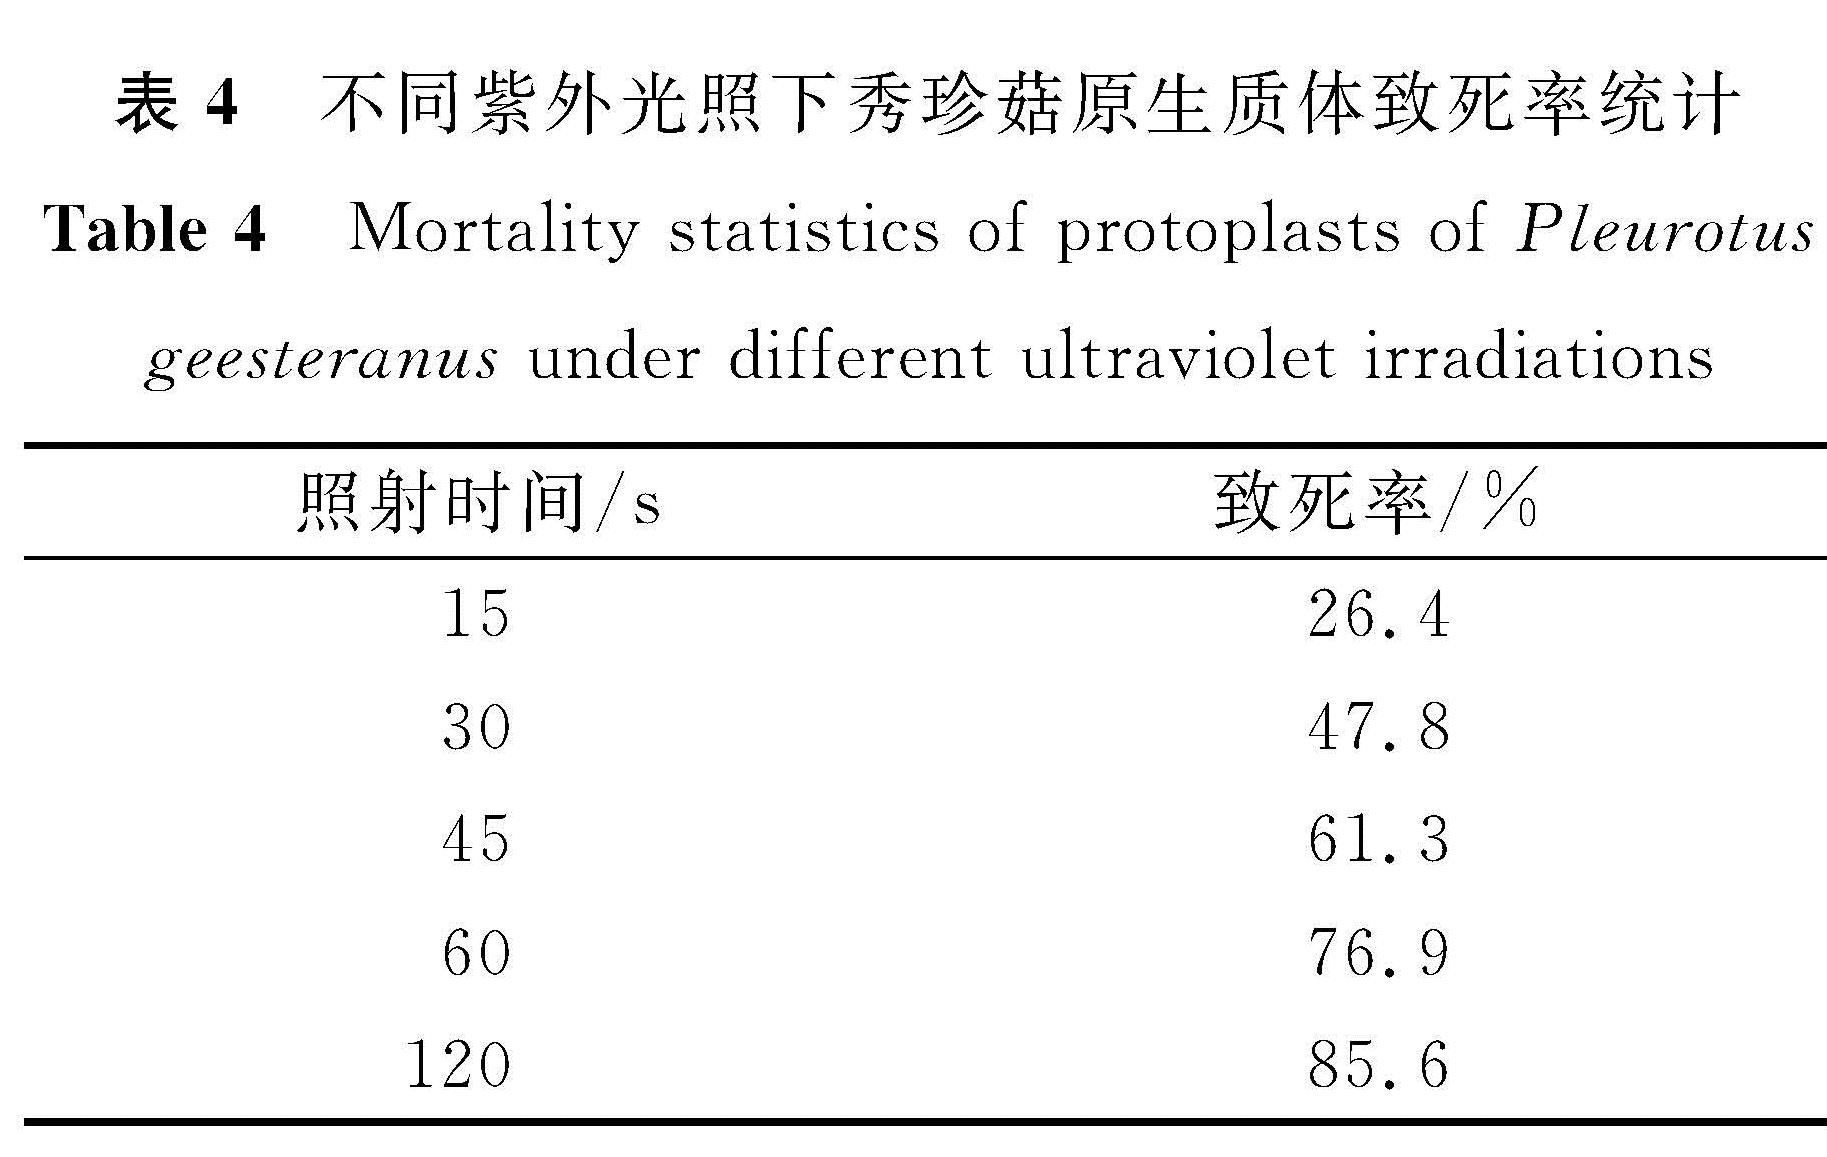 表4 不同紫外光照下秀珍菇原生质体致死率统计<br/>Table 4 Mortality statistics of protoplasts of Pleurotus geesteranus under different ultraviolet irradiations